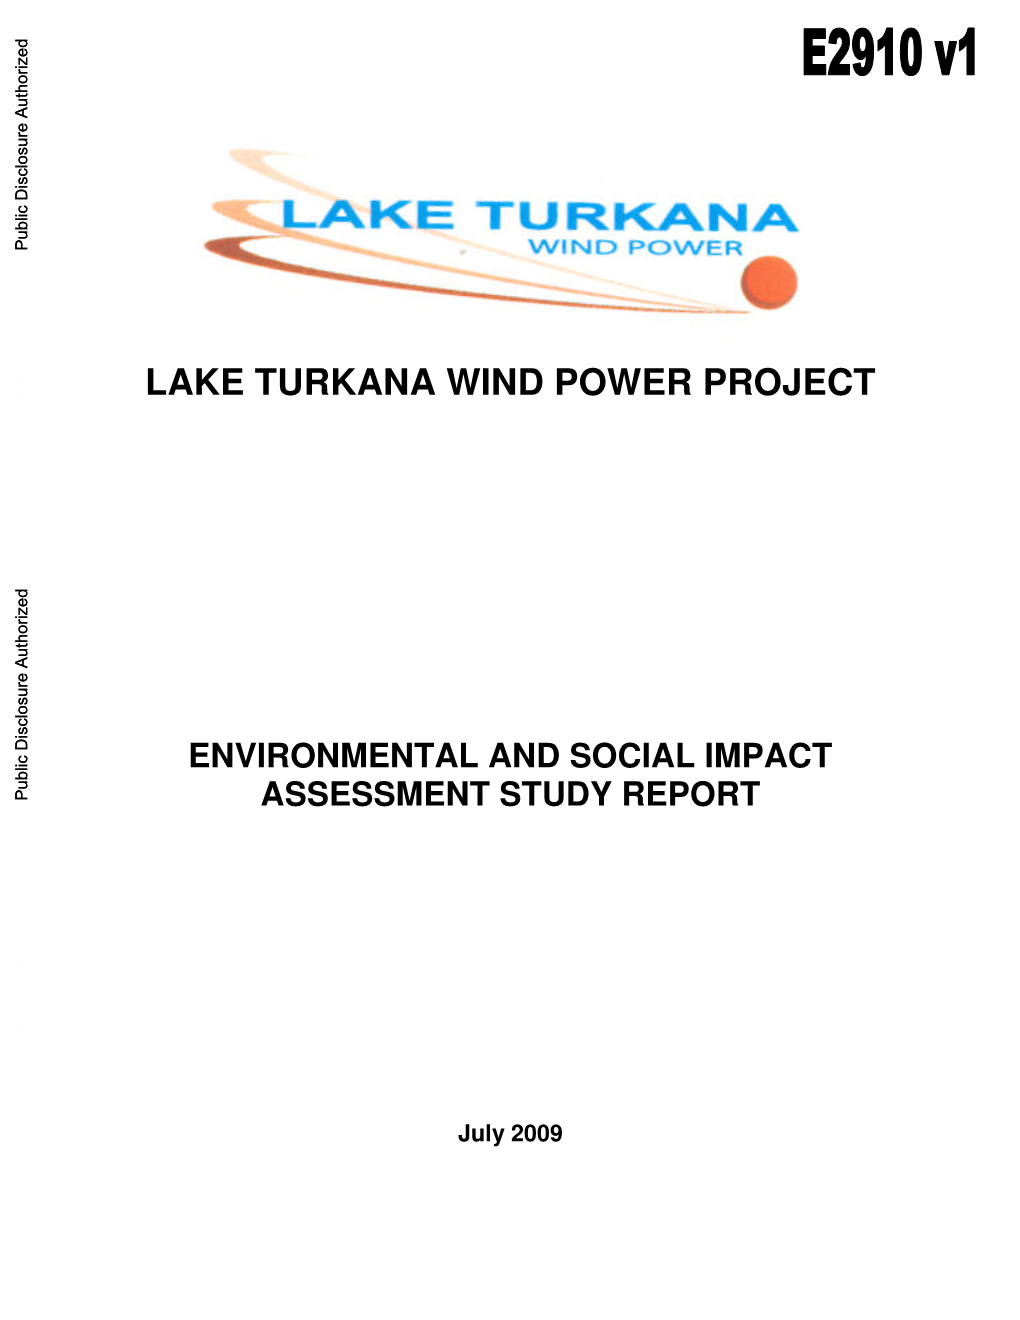 Lake Turkana Wind Power Project